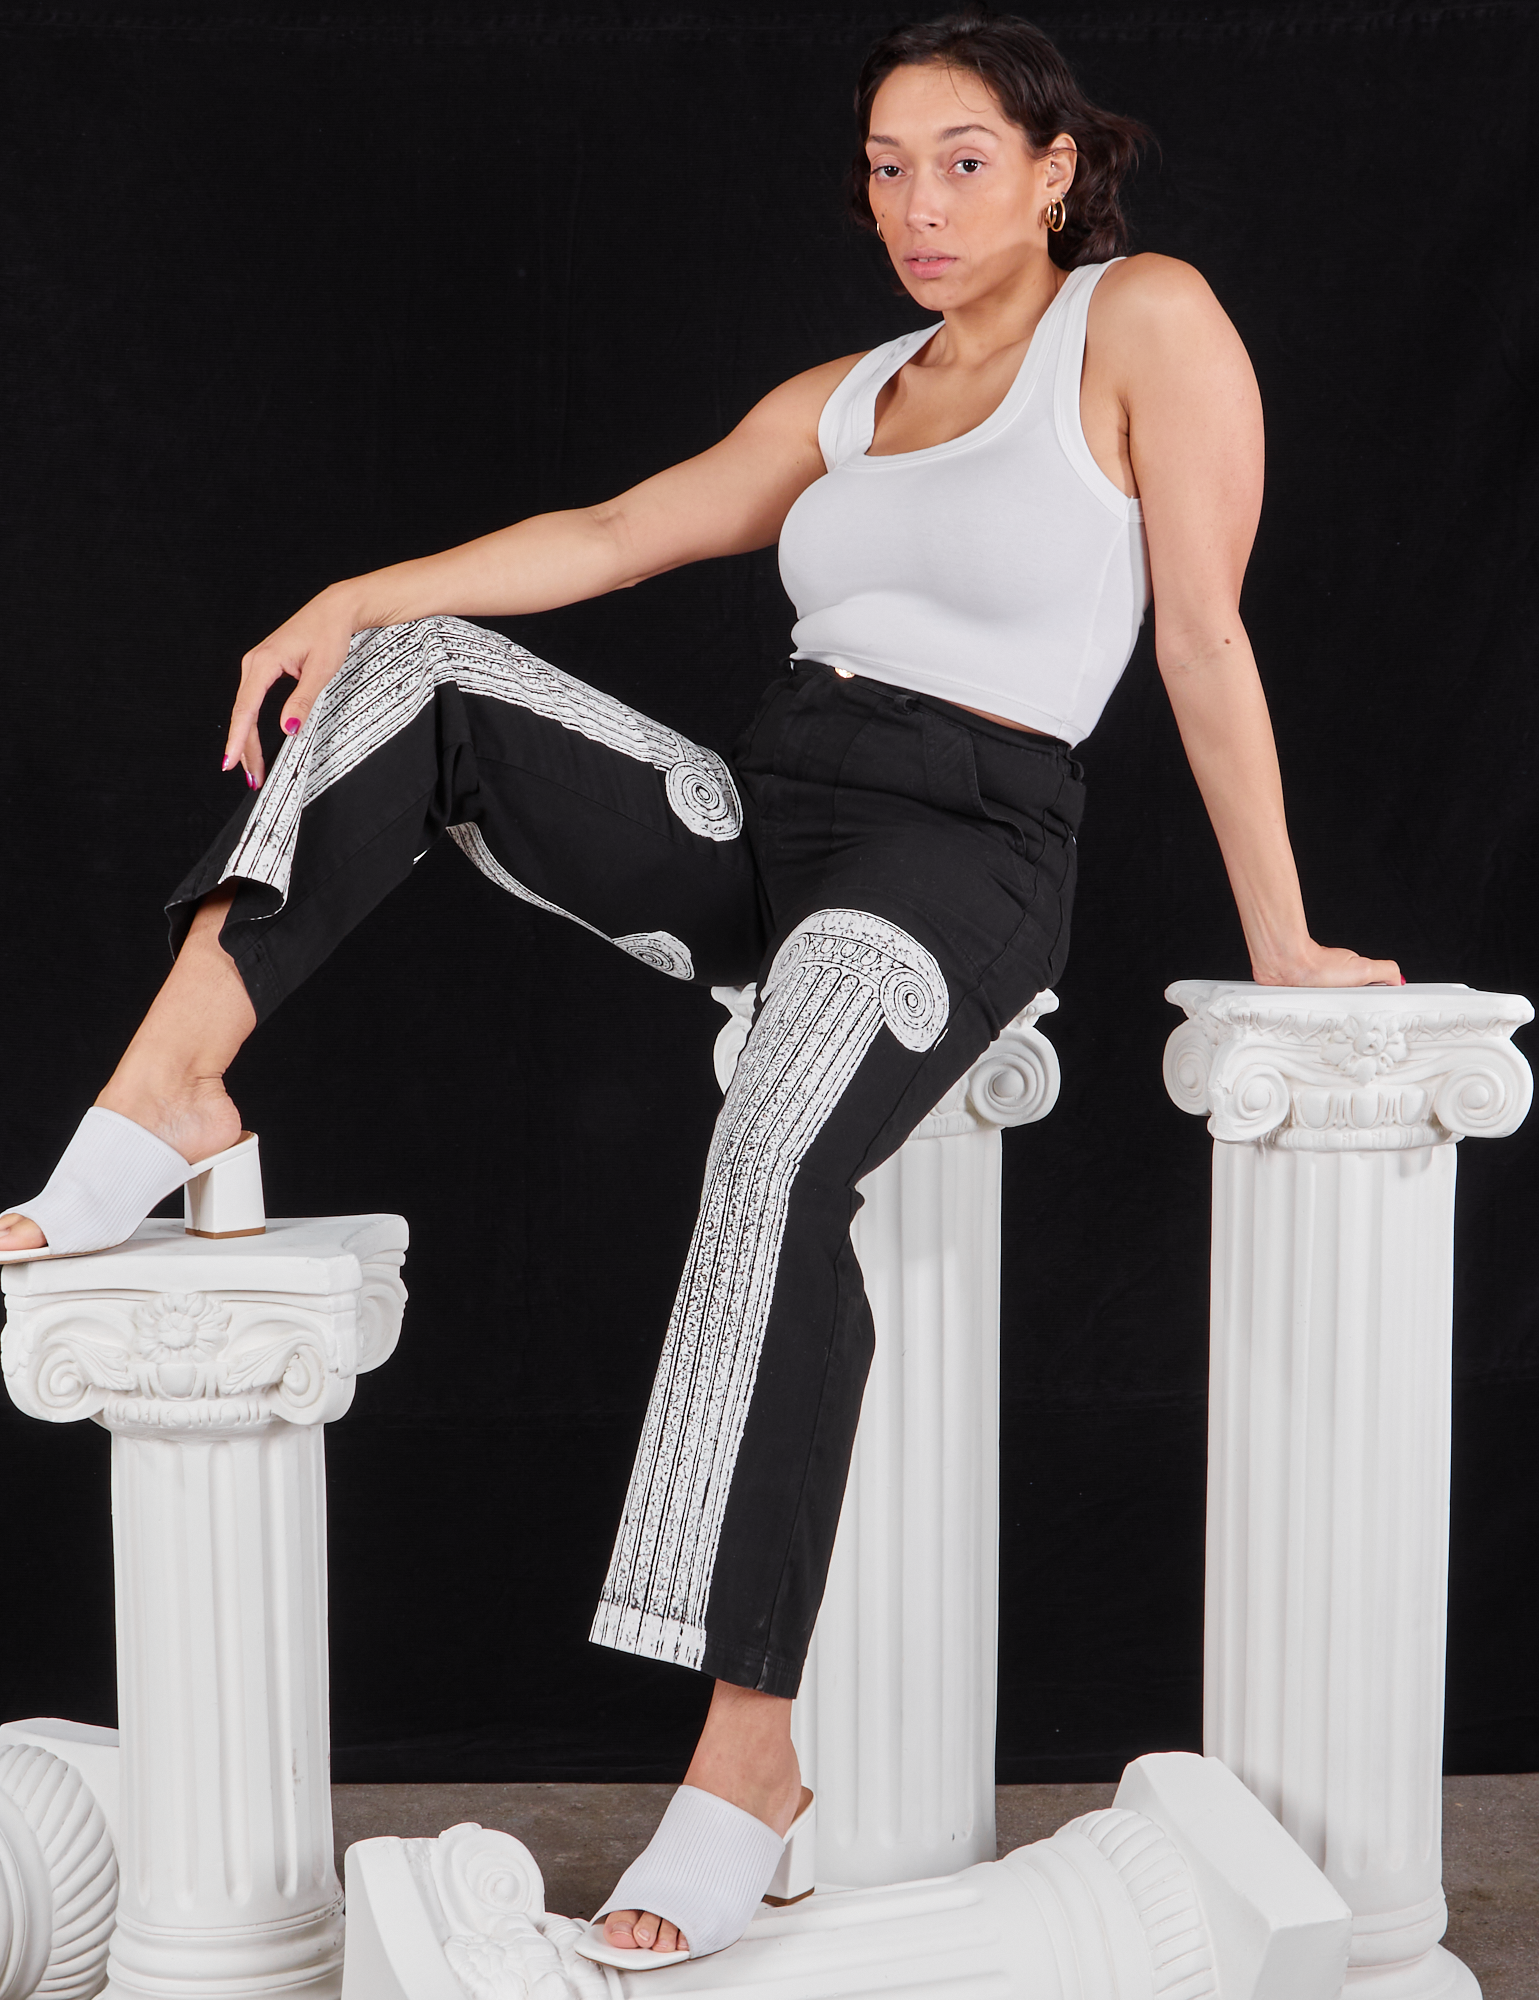 Tiara is wearing Column Work Pants in Basic Black and vintage off-white Cropped Tank Top